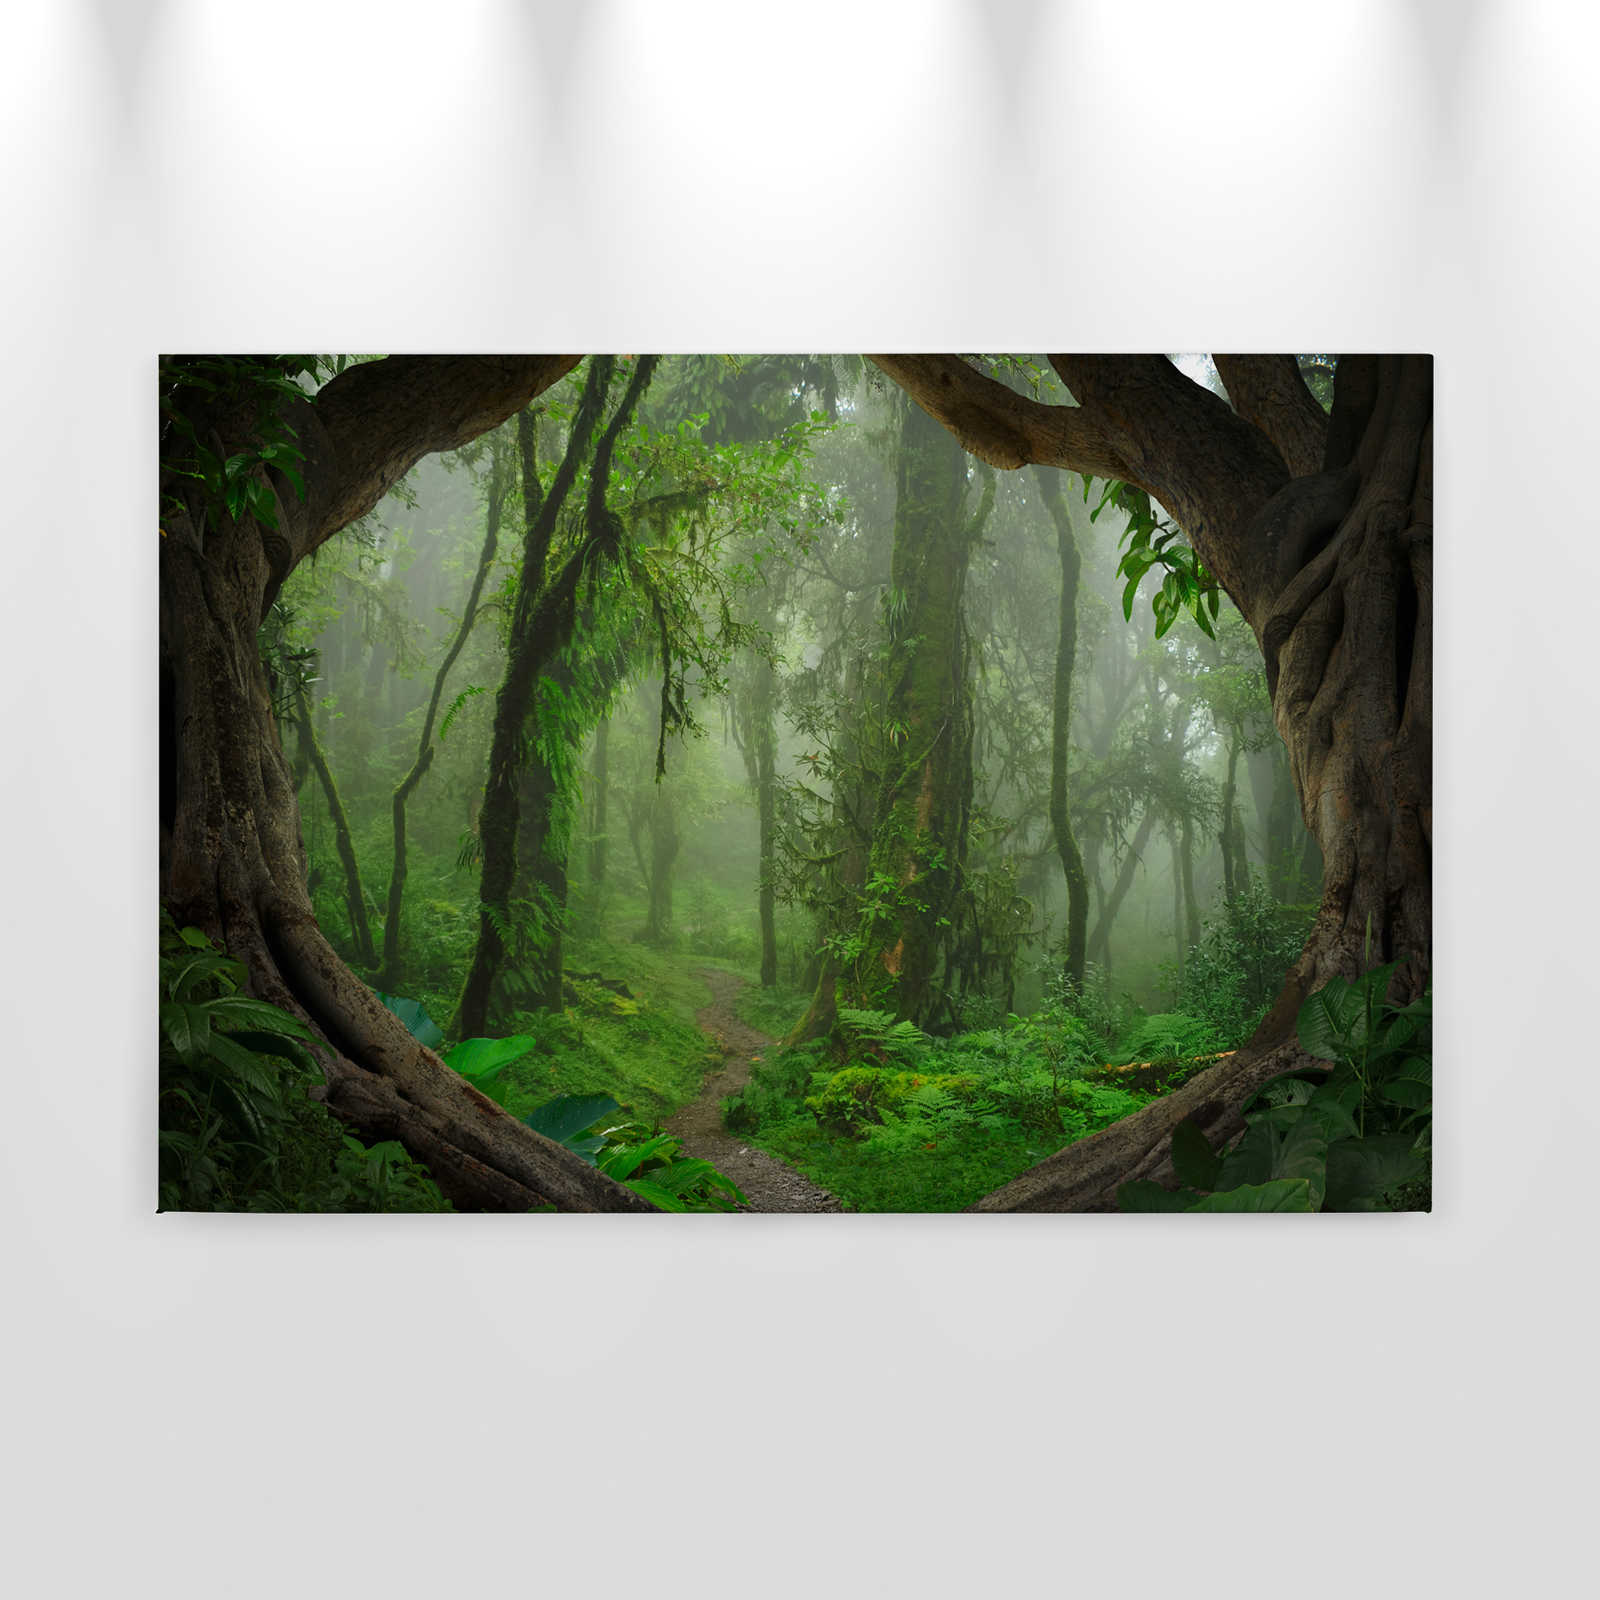             Tela Magic Tropical Forest - 0,90 m x 0,60 m
        